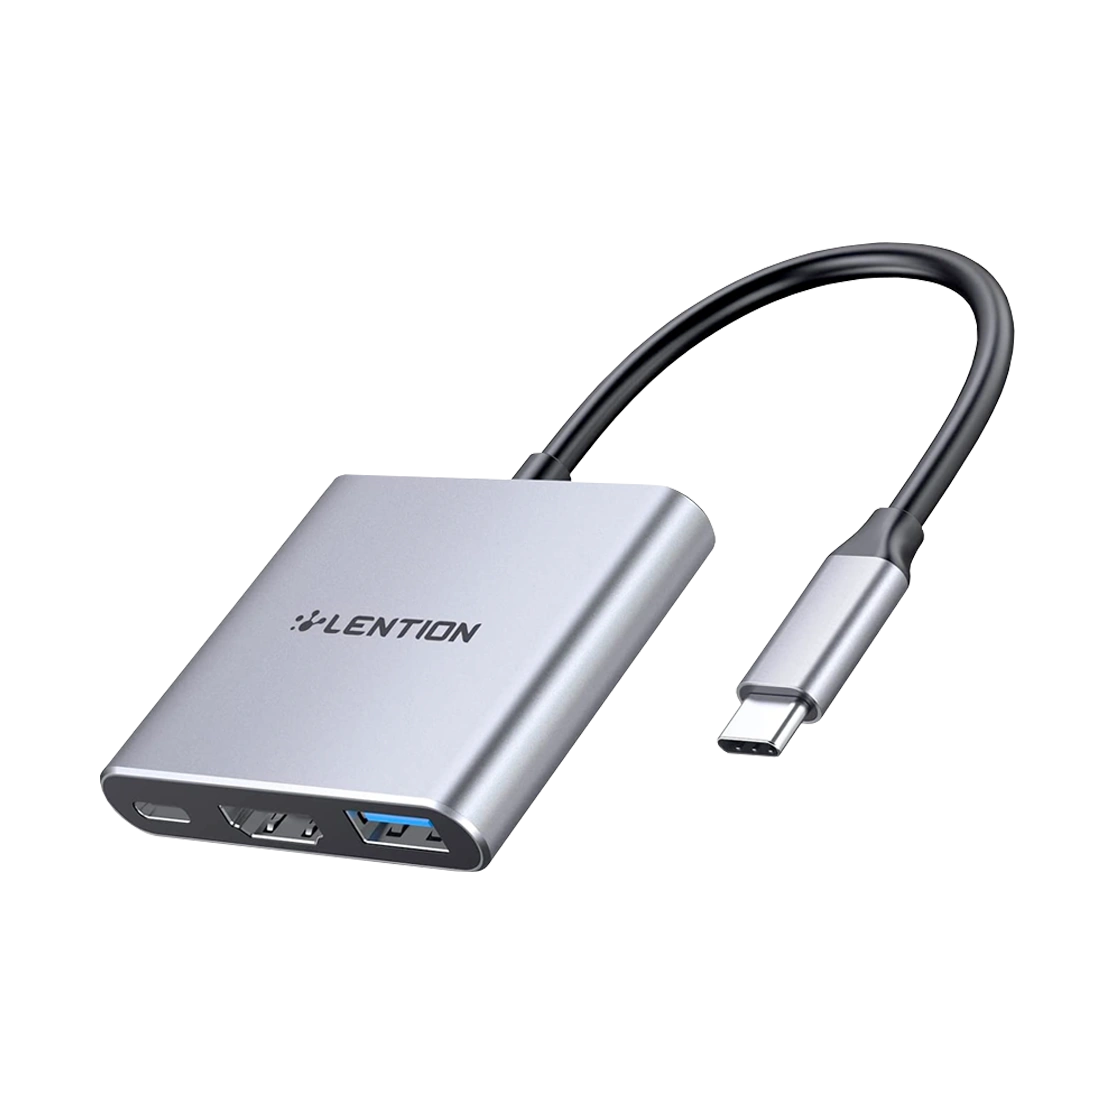 Lention USB-C to HDMI USB 3.0 USB-C PD C14